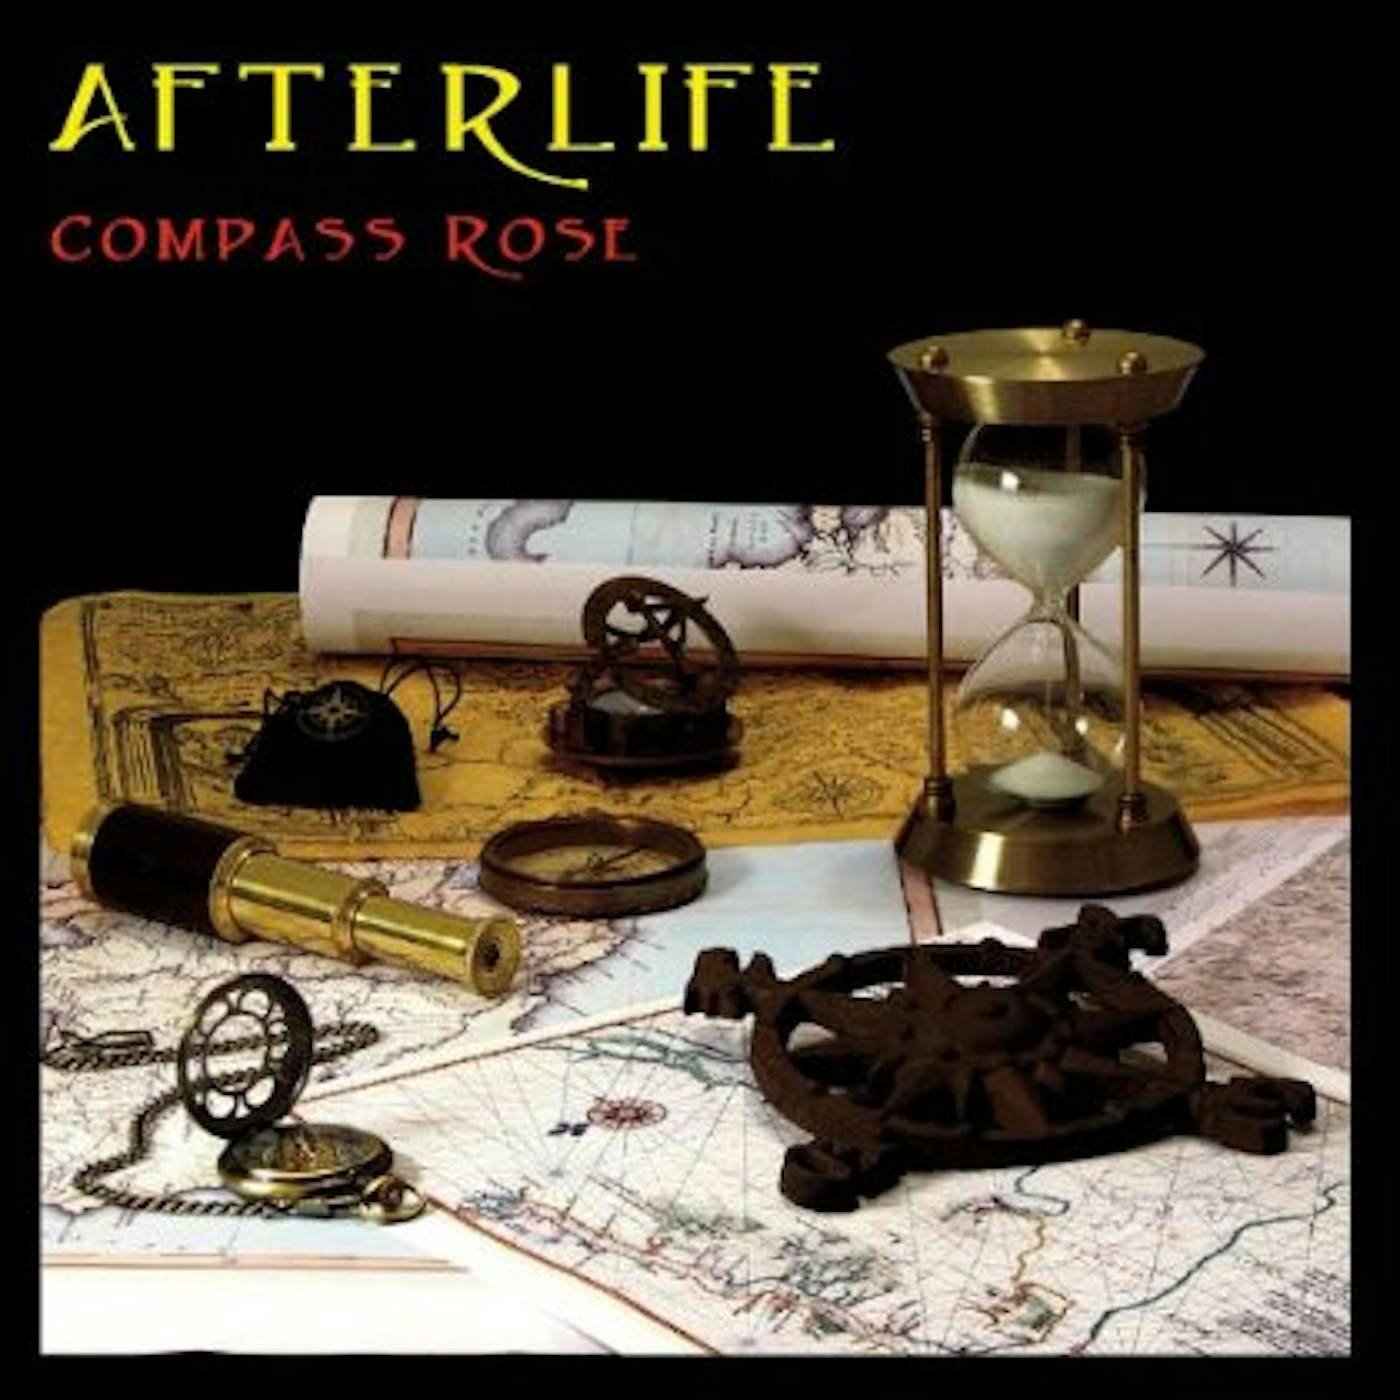 Afterlife COMPASS ROSE CD